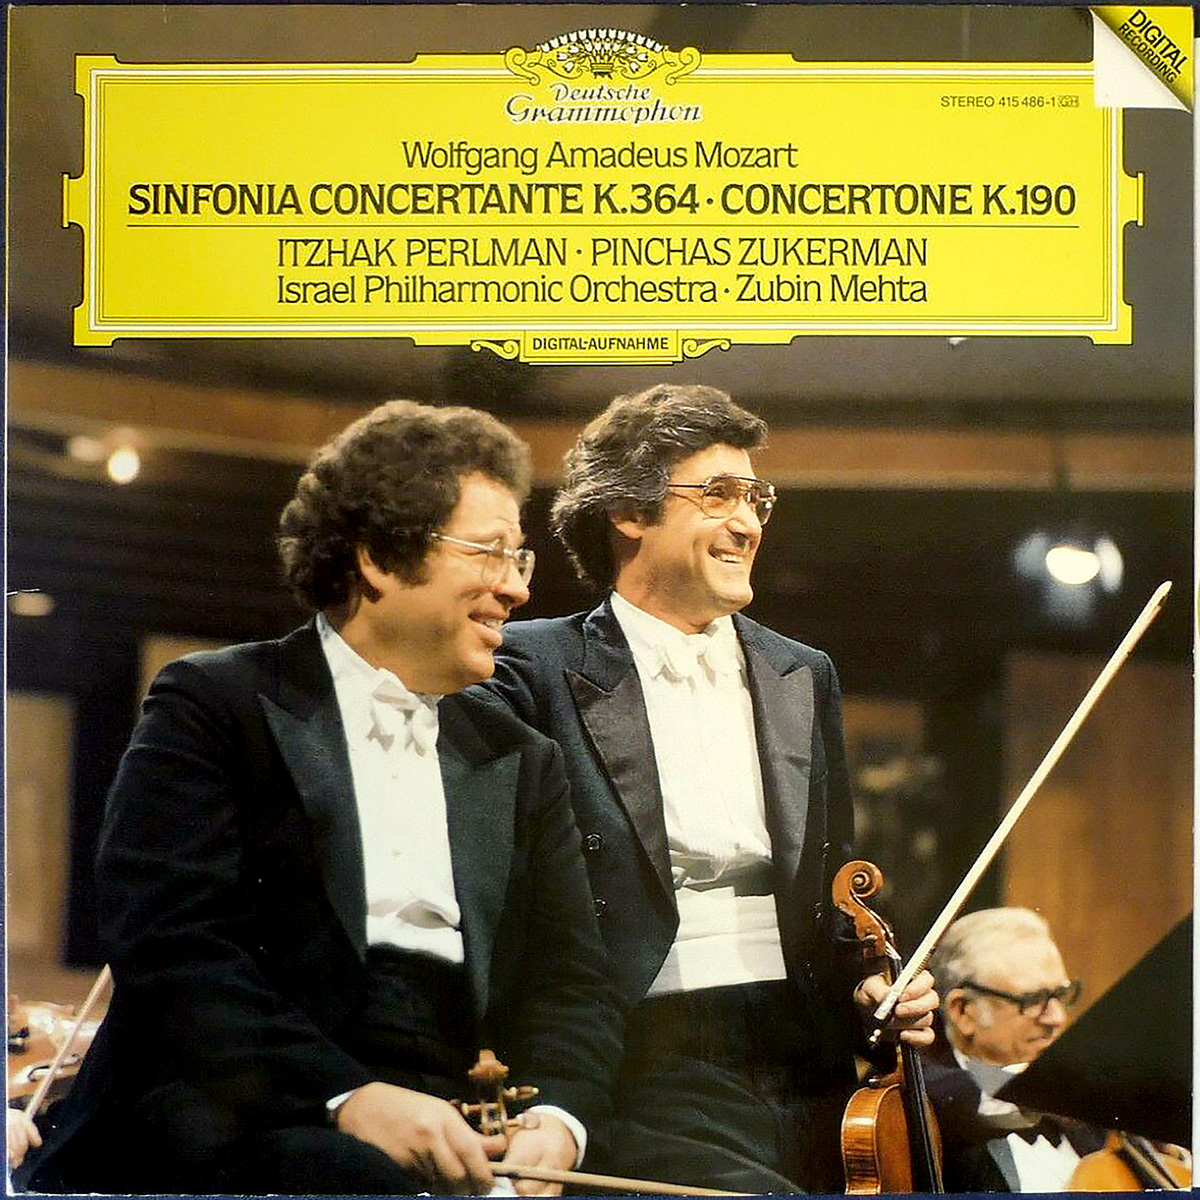 DGG 415 486 Mozart Sinfonia Concertante Perlman Zukerman Mehta DGG Digital Aufnahme